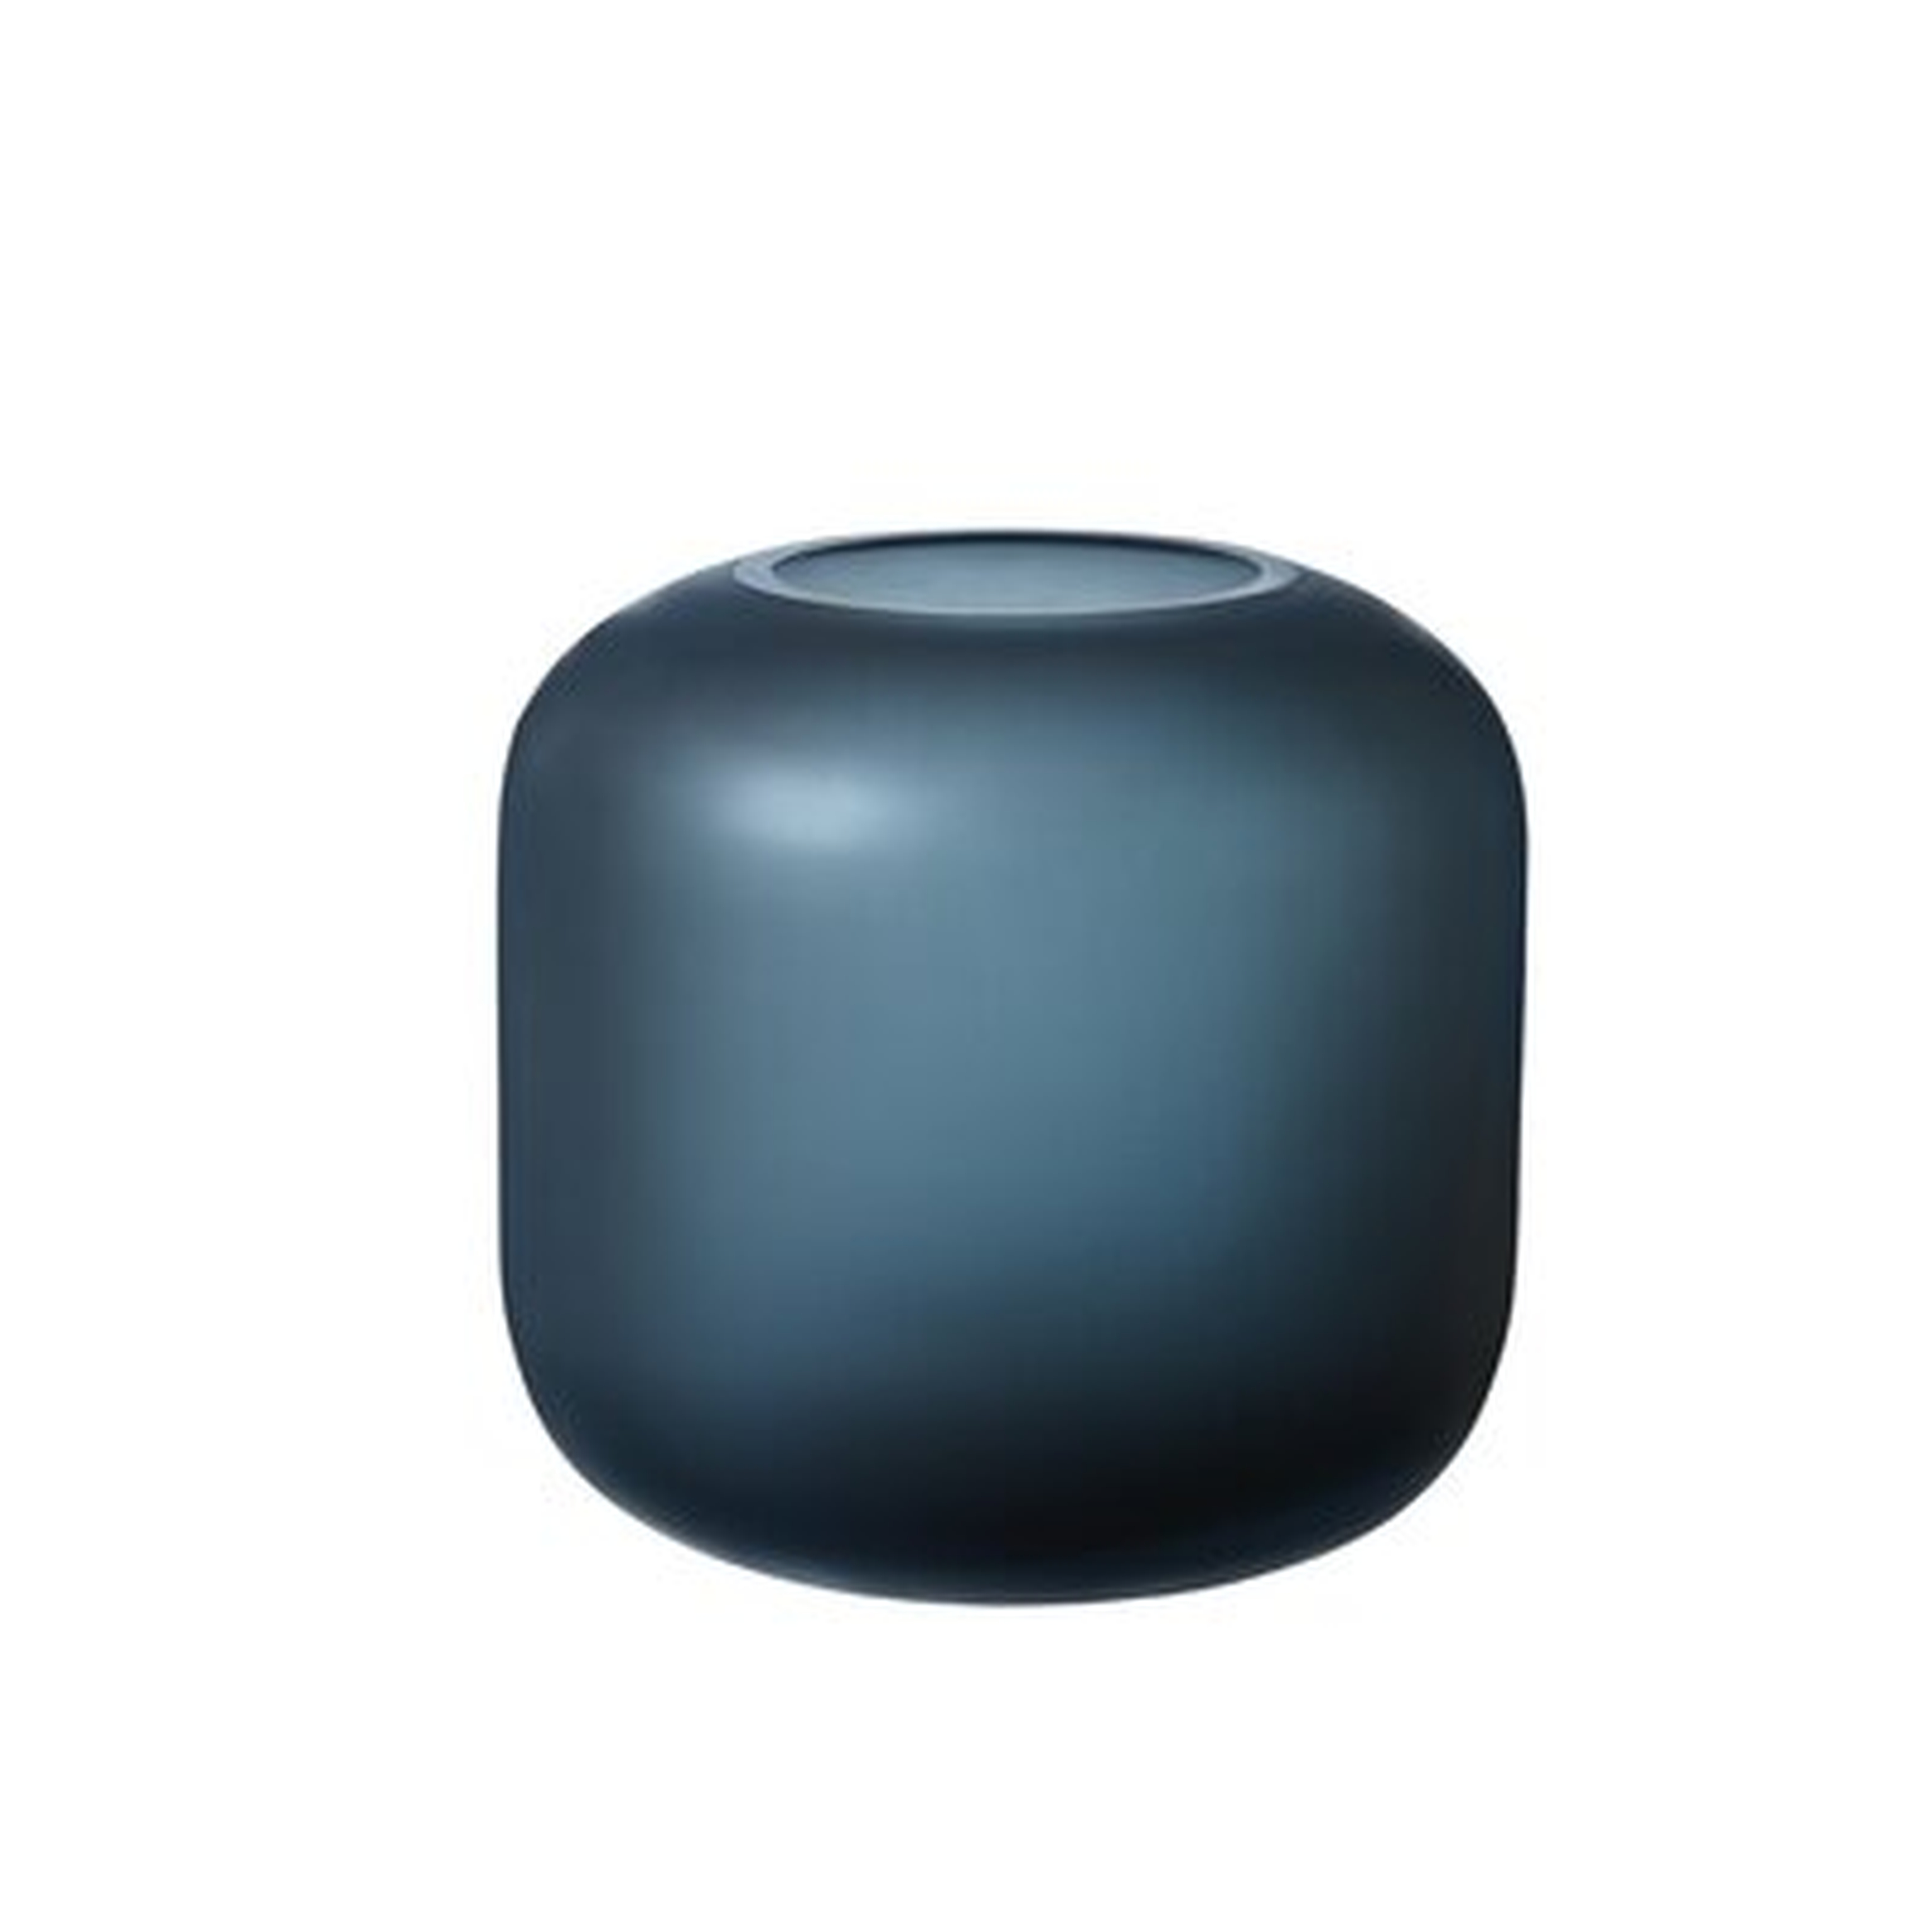 Ovalo Vase 7X7 - Wayfair